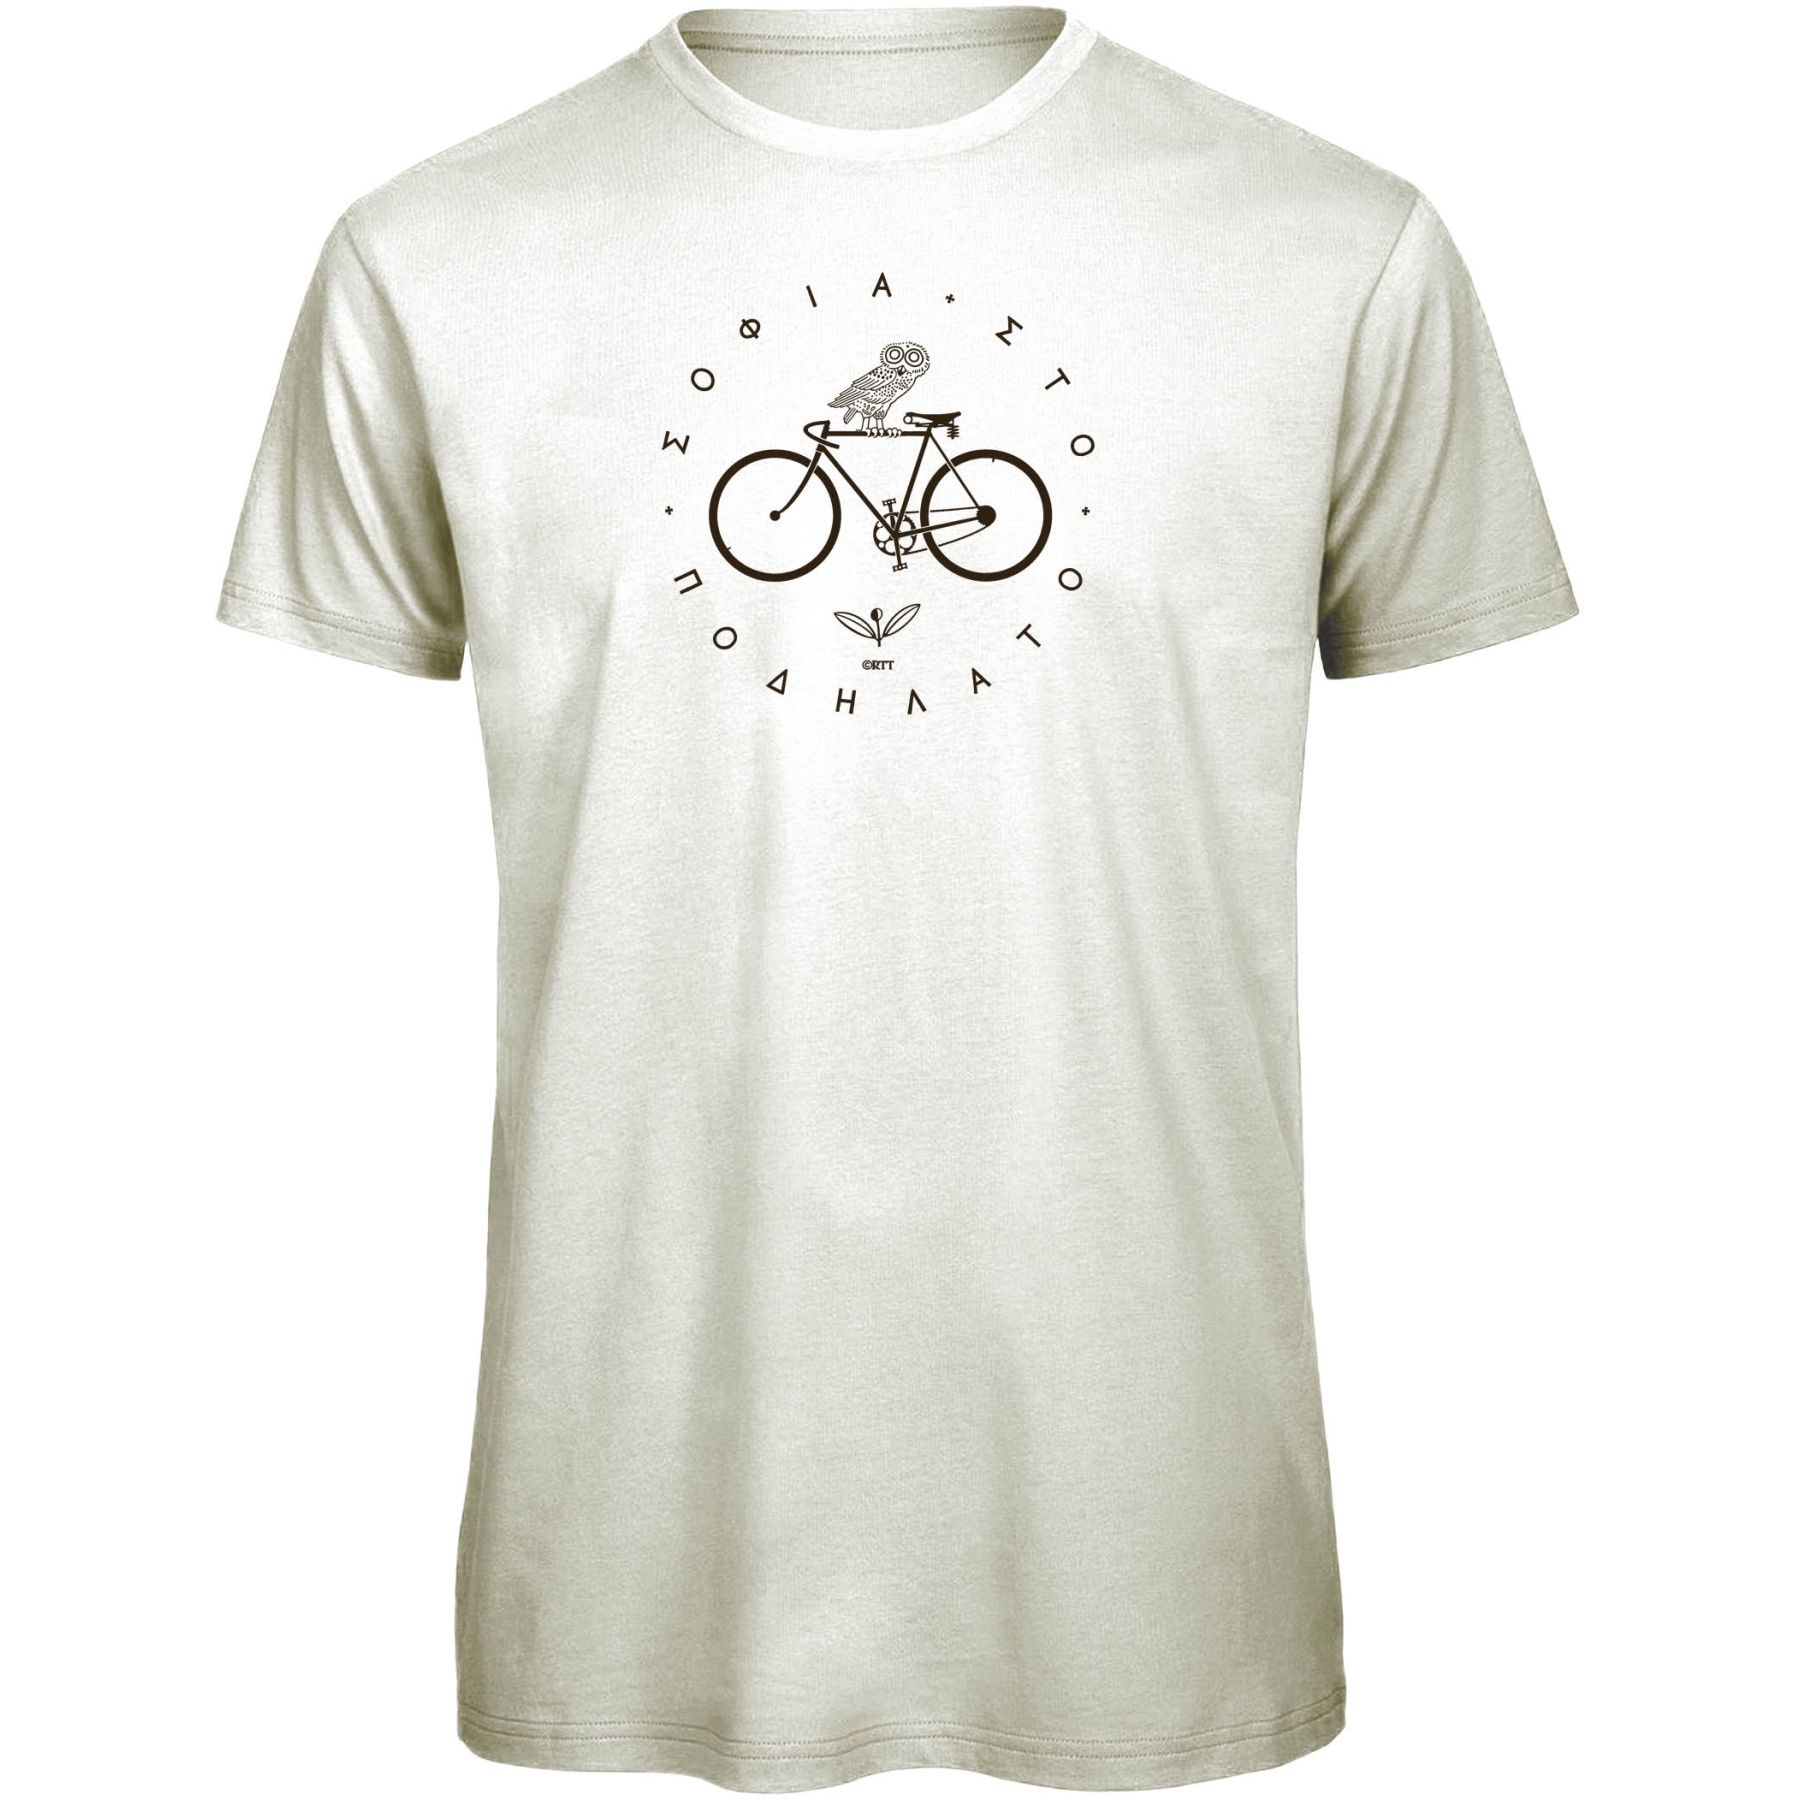 Imagen de RTTshirts Camiseta Bicicleta - Minerva - blanco